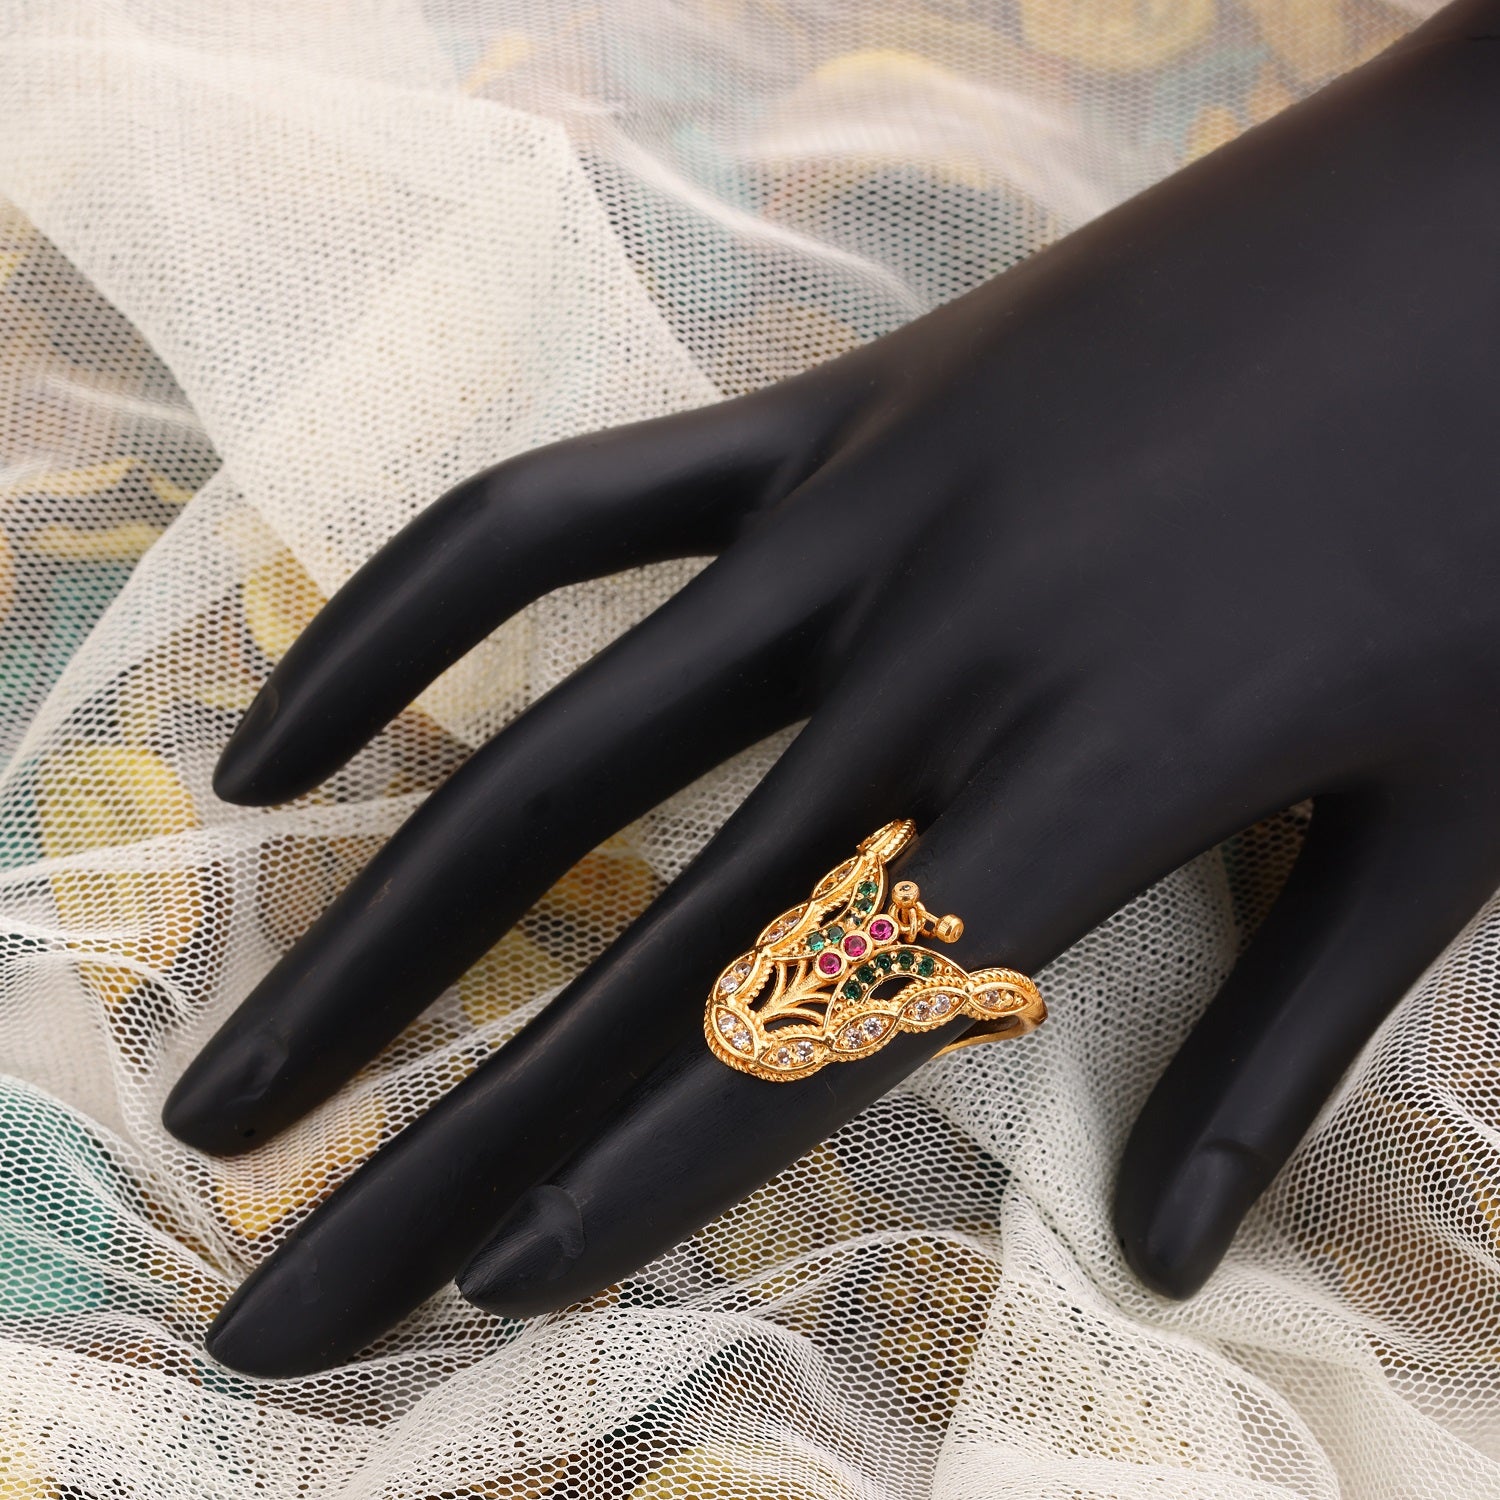 New latest gold long ring design for ladies/Gold finger ring design images  - YouTube